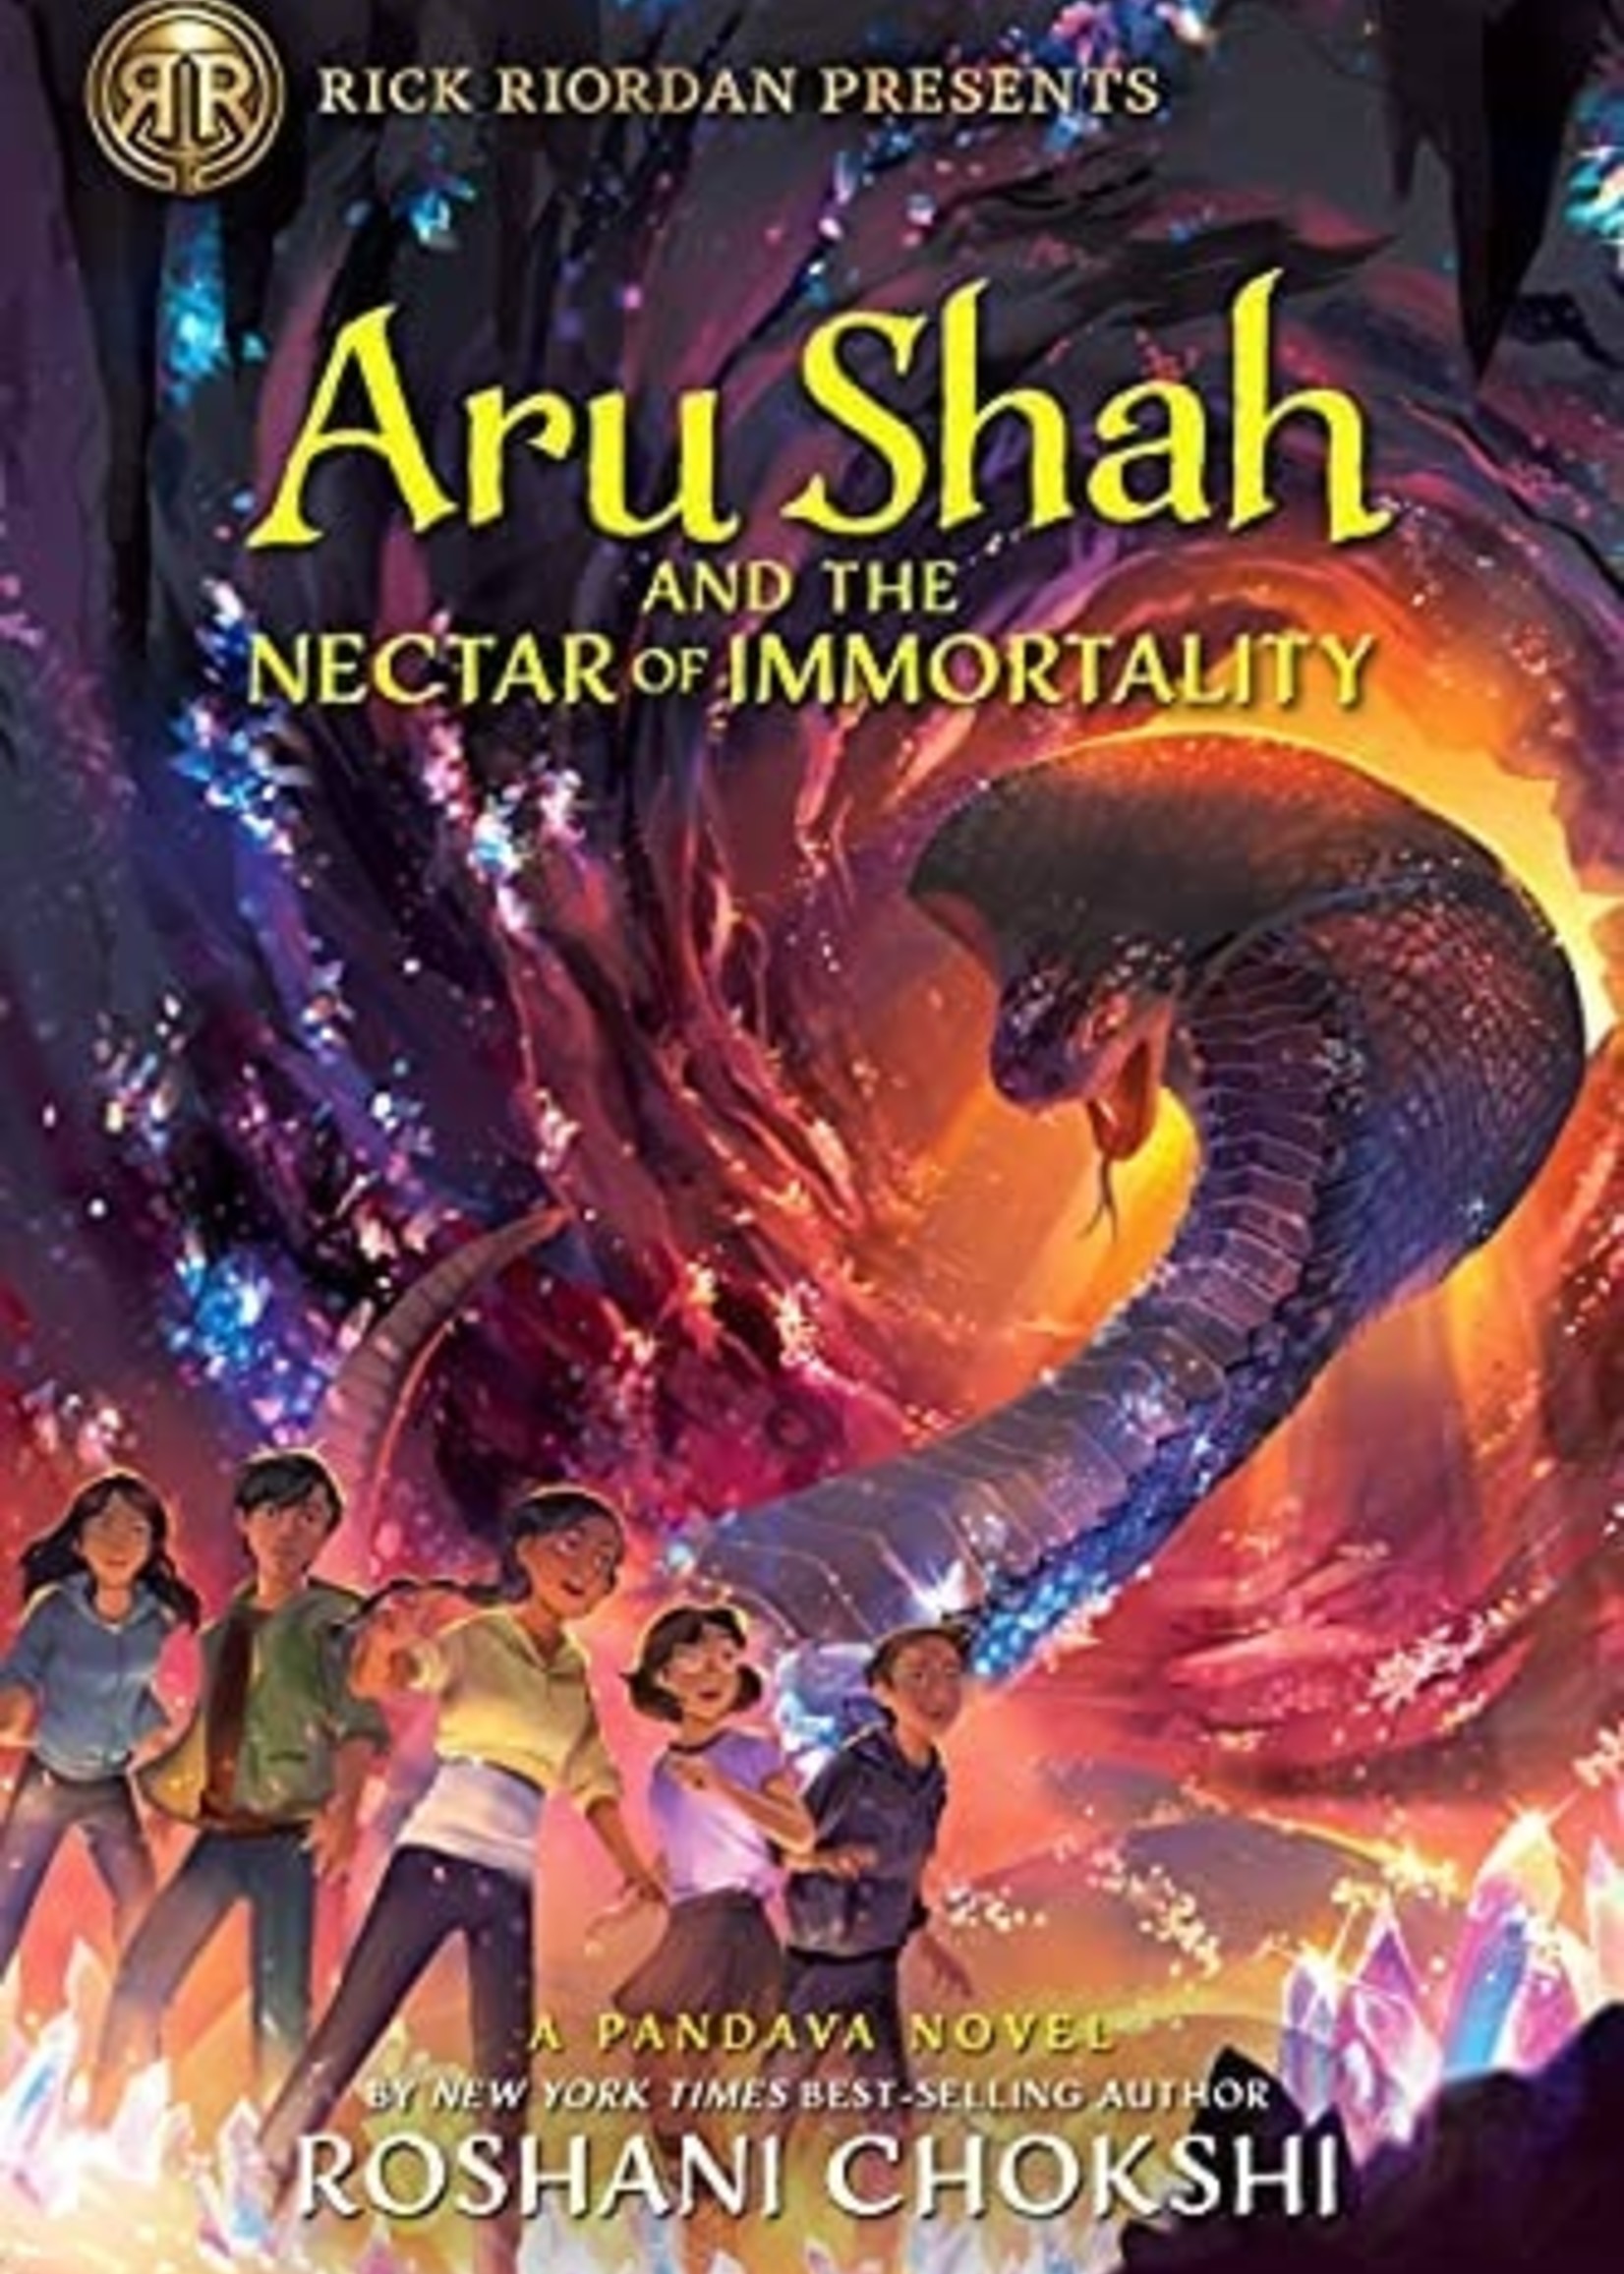 Rick Riordan Presents: Pandava #05, Aru Shah and the Nectar of Immortality - Hardcover